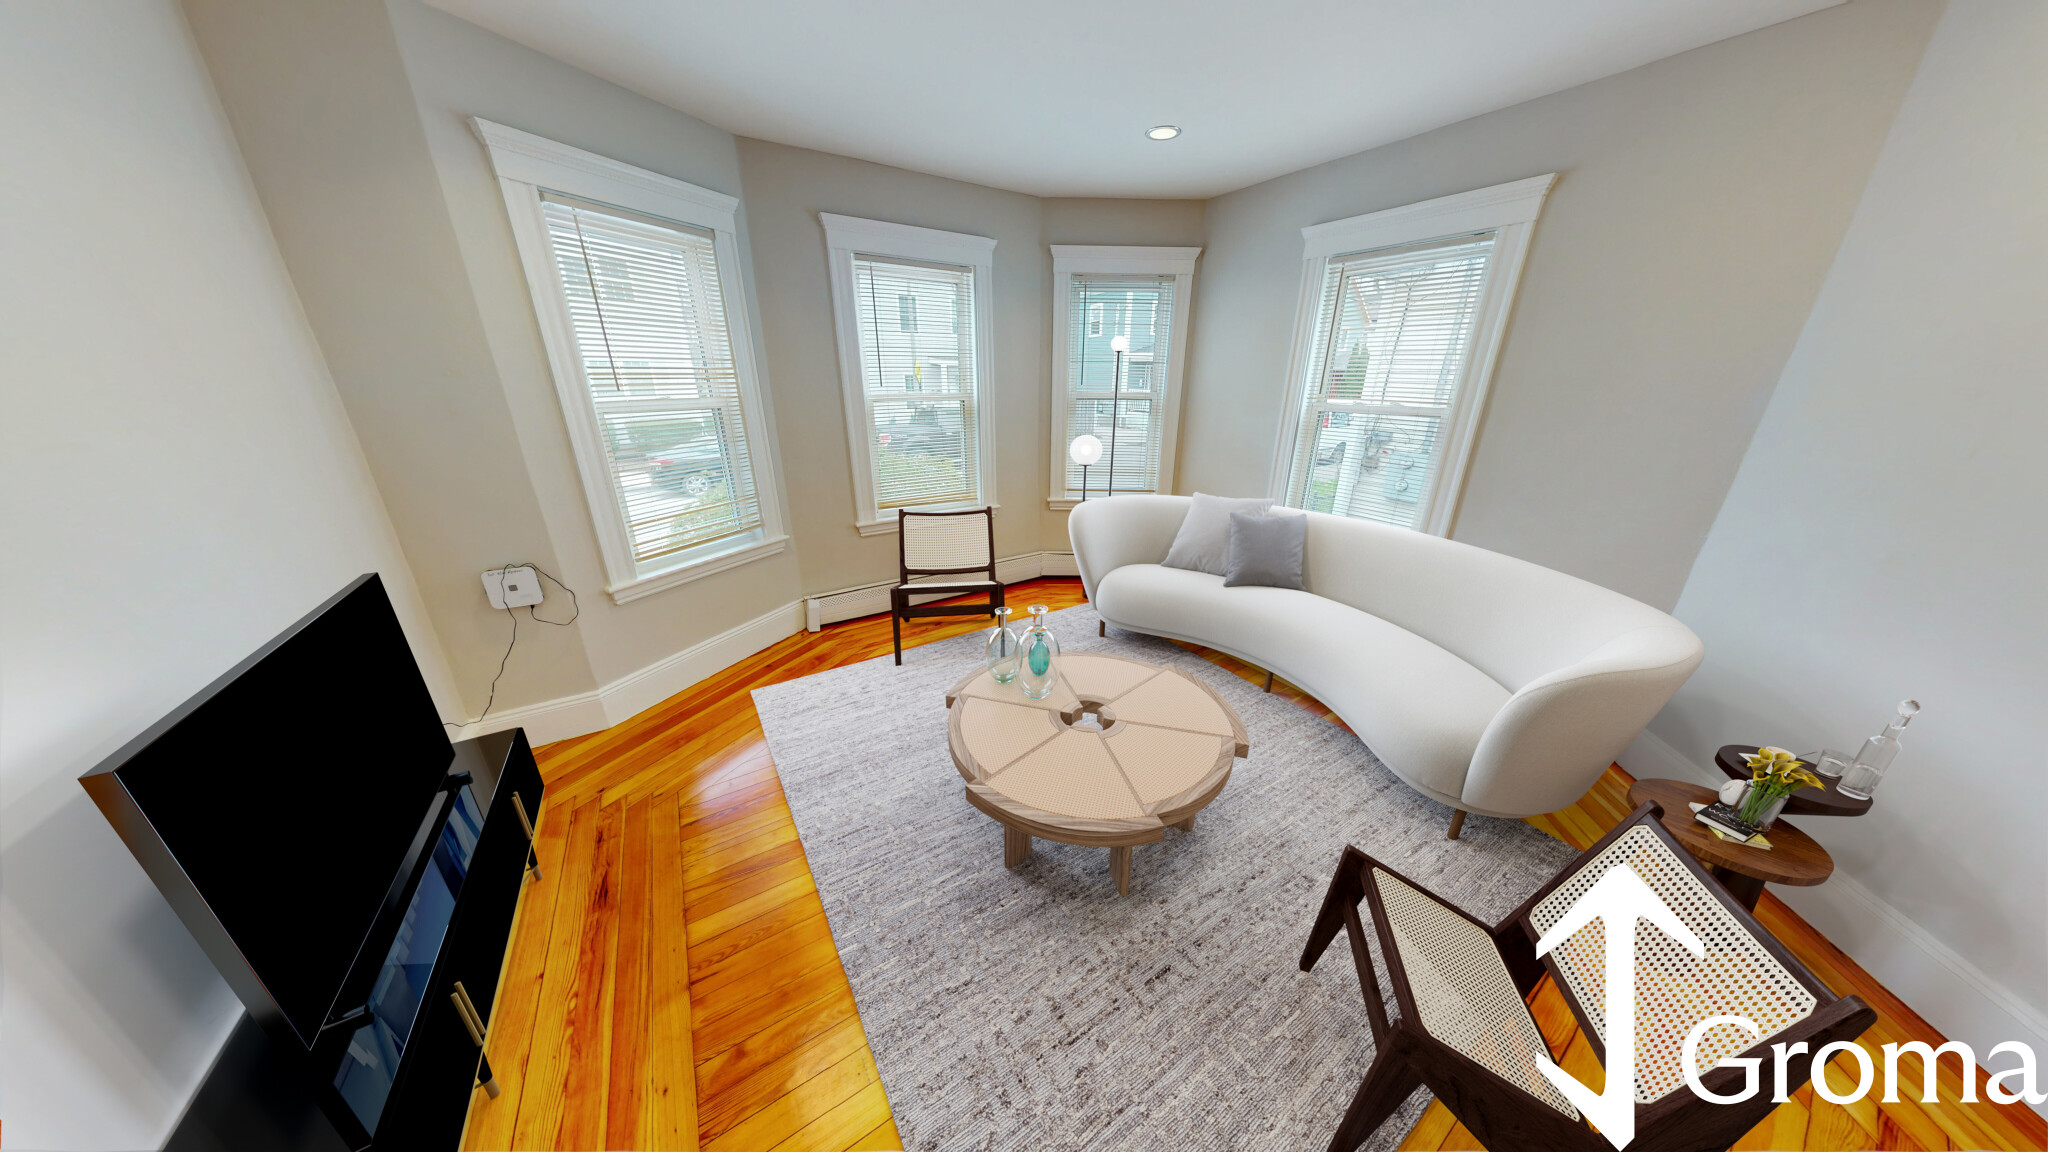 Photos of apartment on Adams,Boston MA 02122